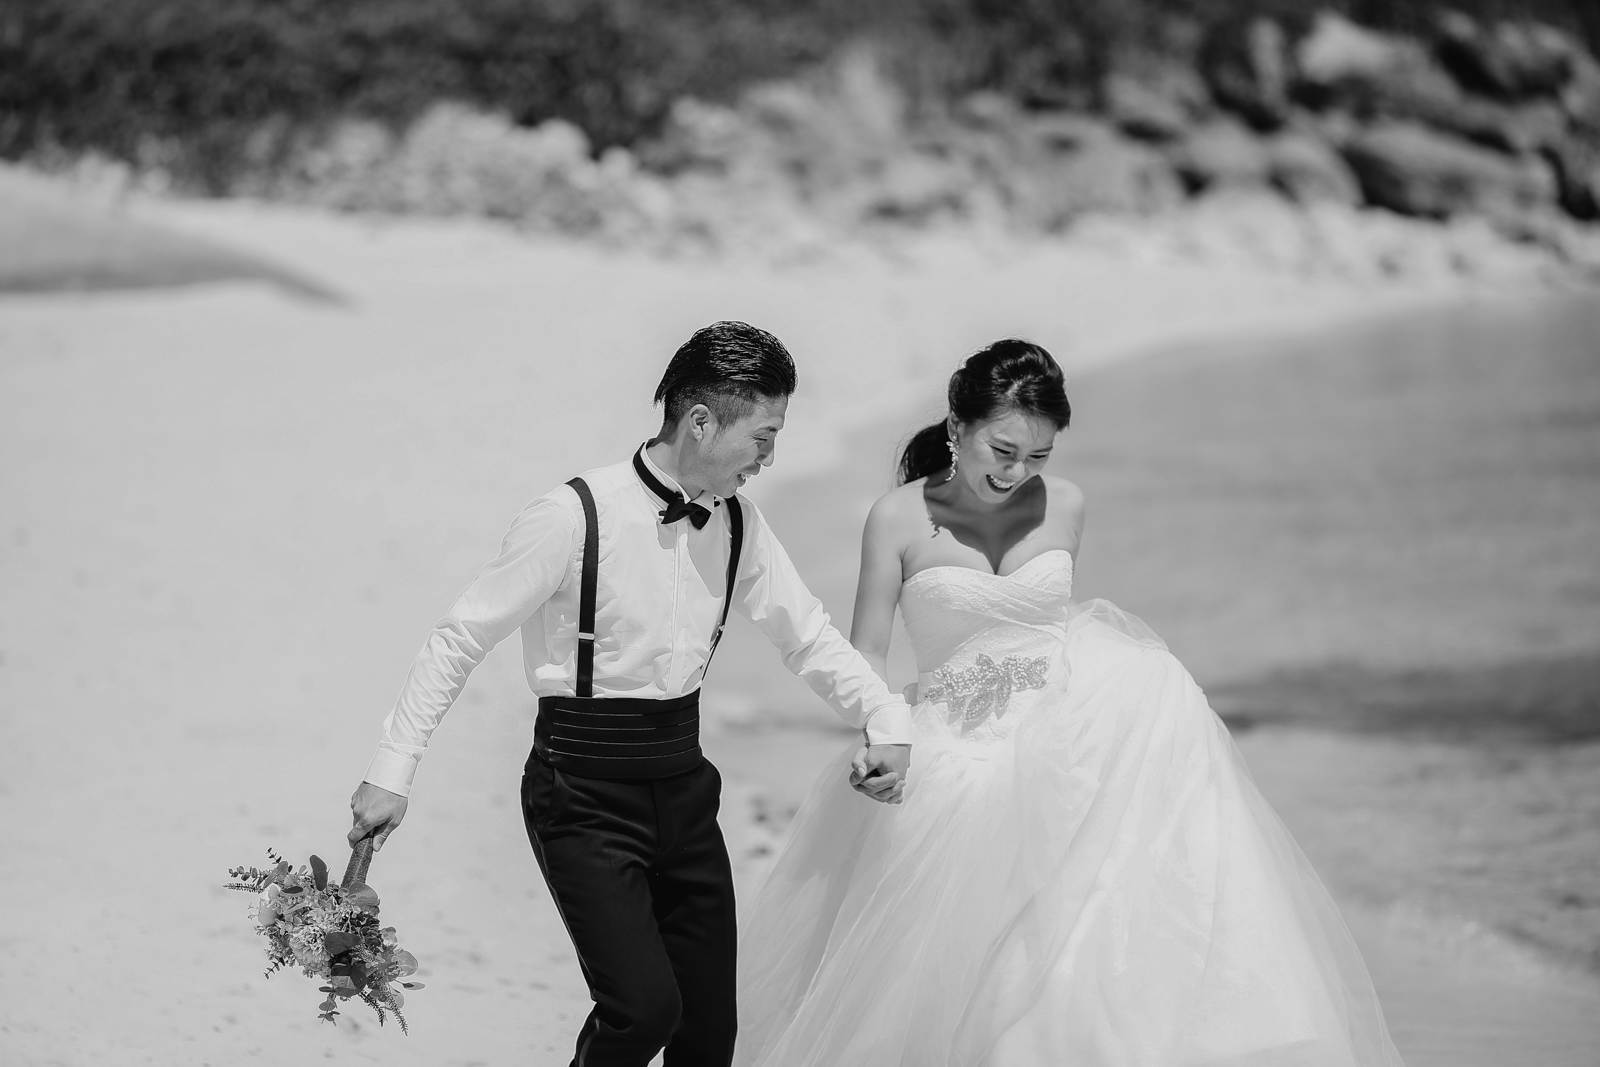 ctp 24 - Shojiro & Hiroko's Shangrila Mactan Cebu Intimate Wedding